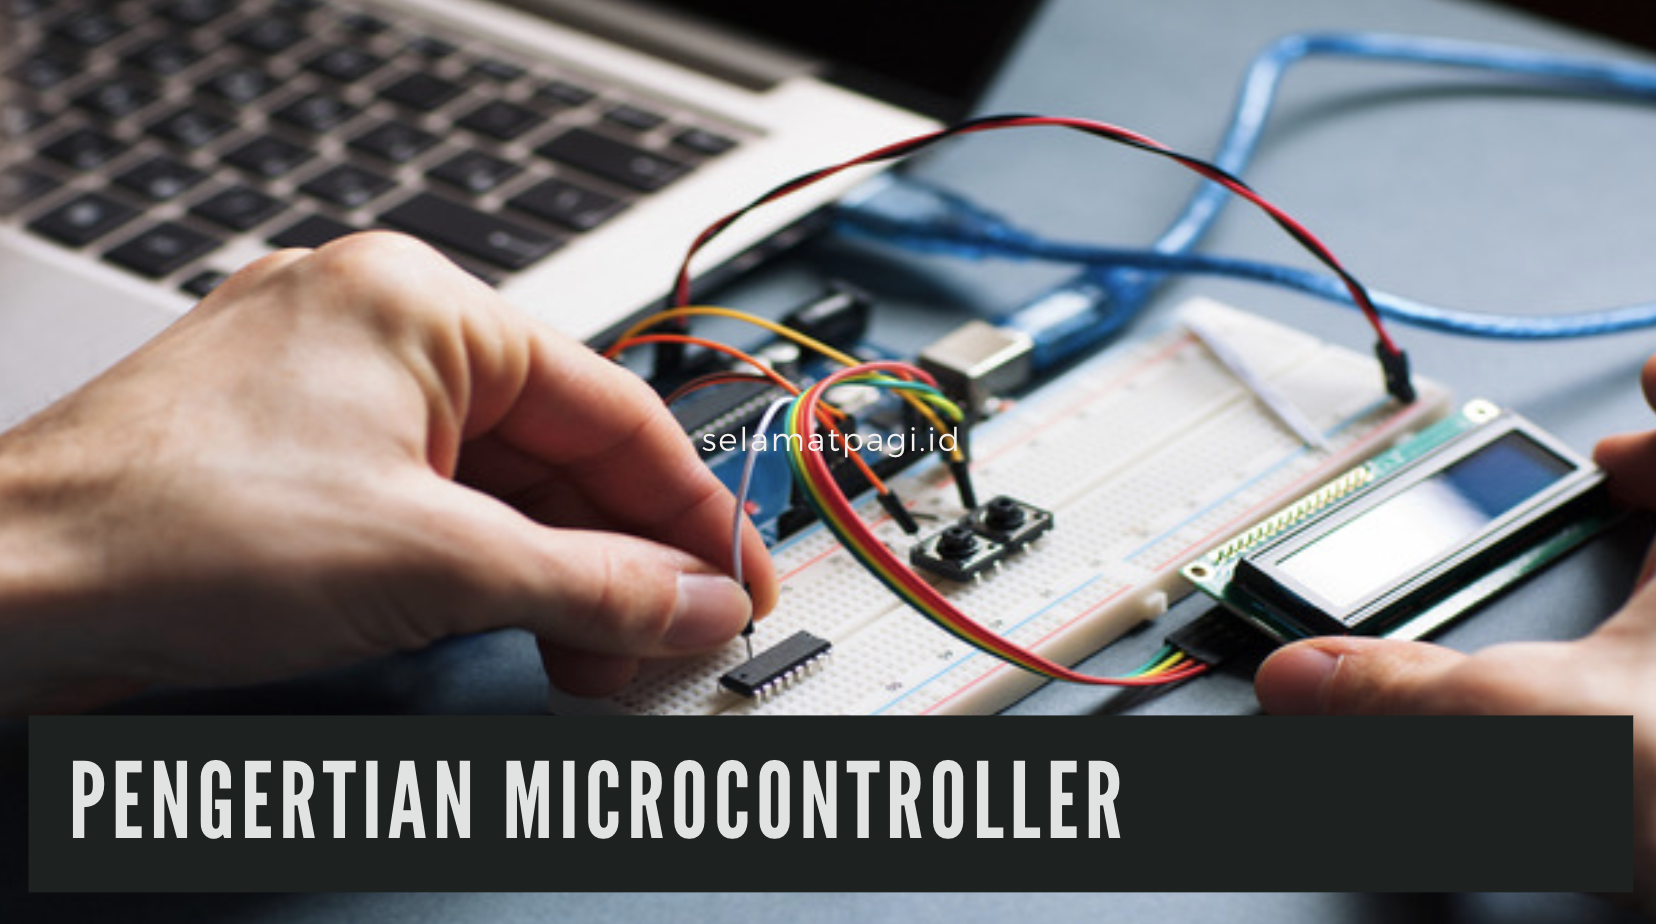 Pengertian Microcontroller